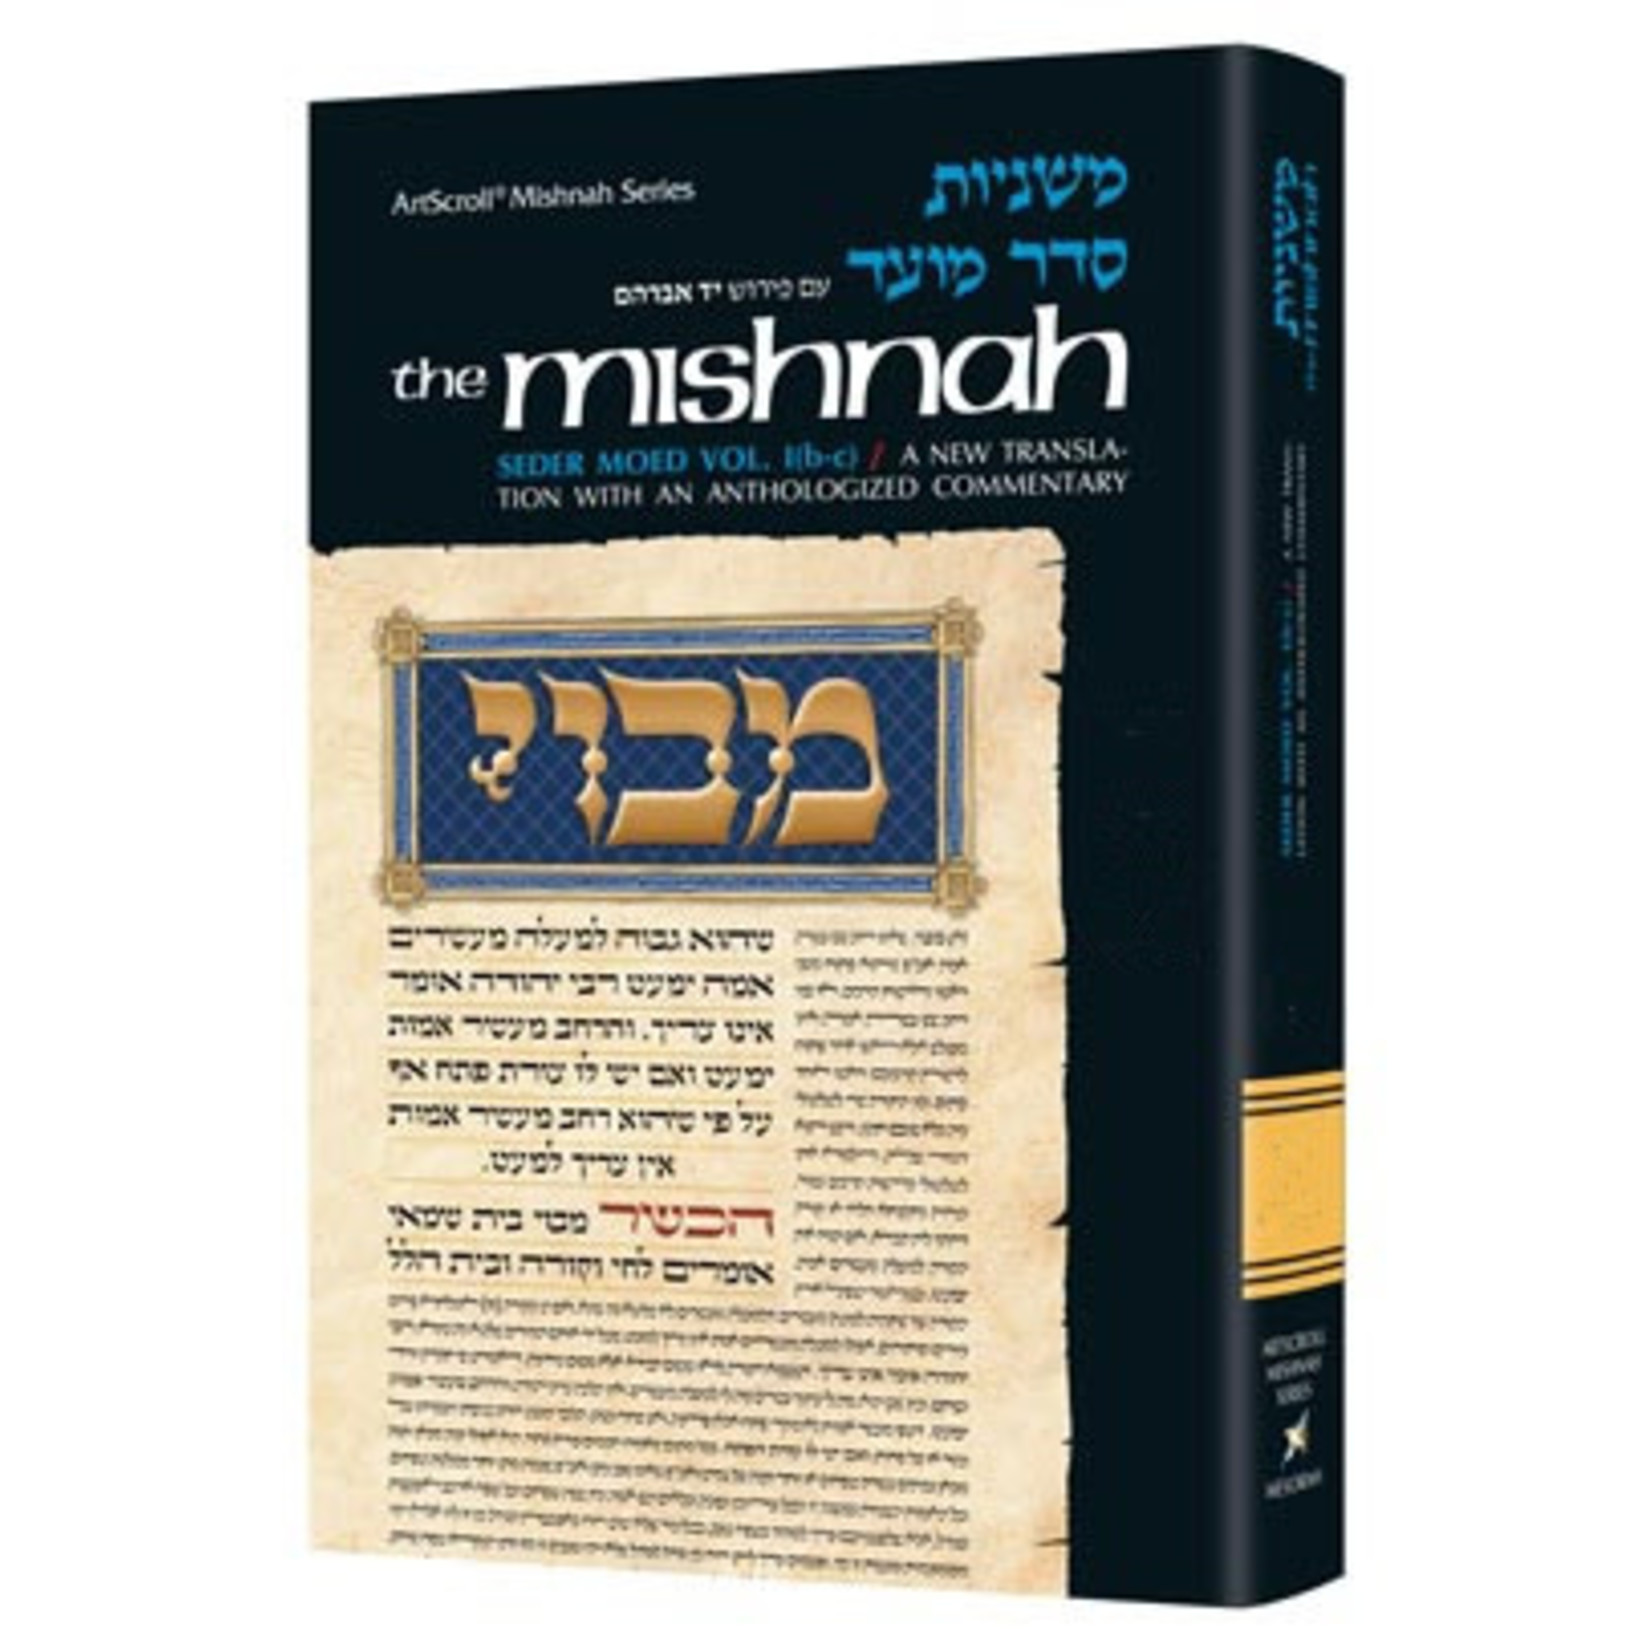 TAANIS/MEGILLAH/MOED KATAN/CHAGIGAH - Seder Moed 4 - ArtScroll Yad Avraham Series Hebrew/English Mishnah, Full Size